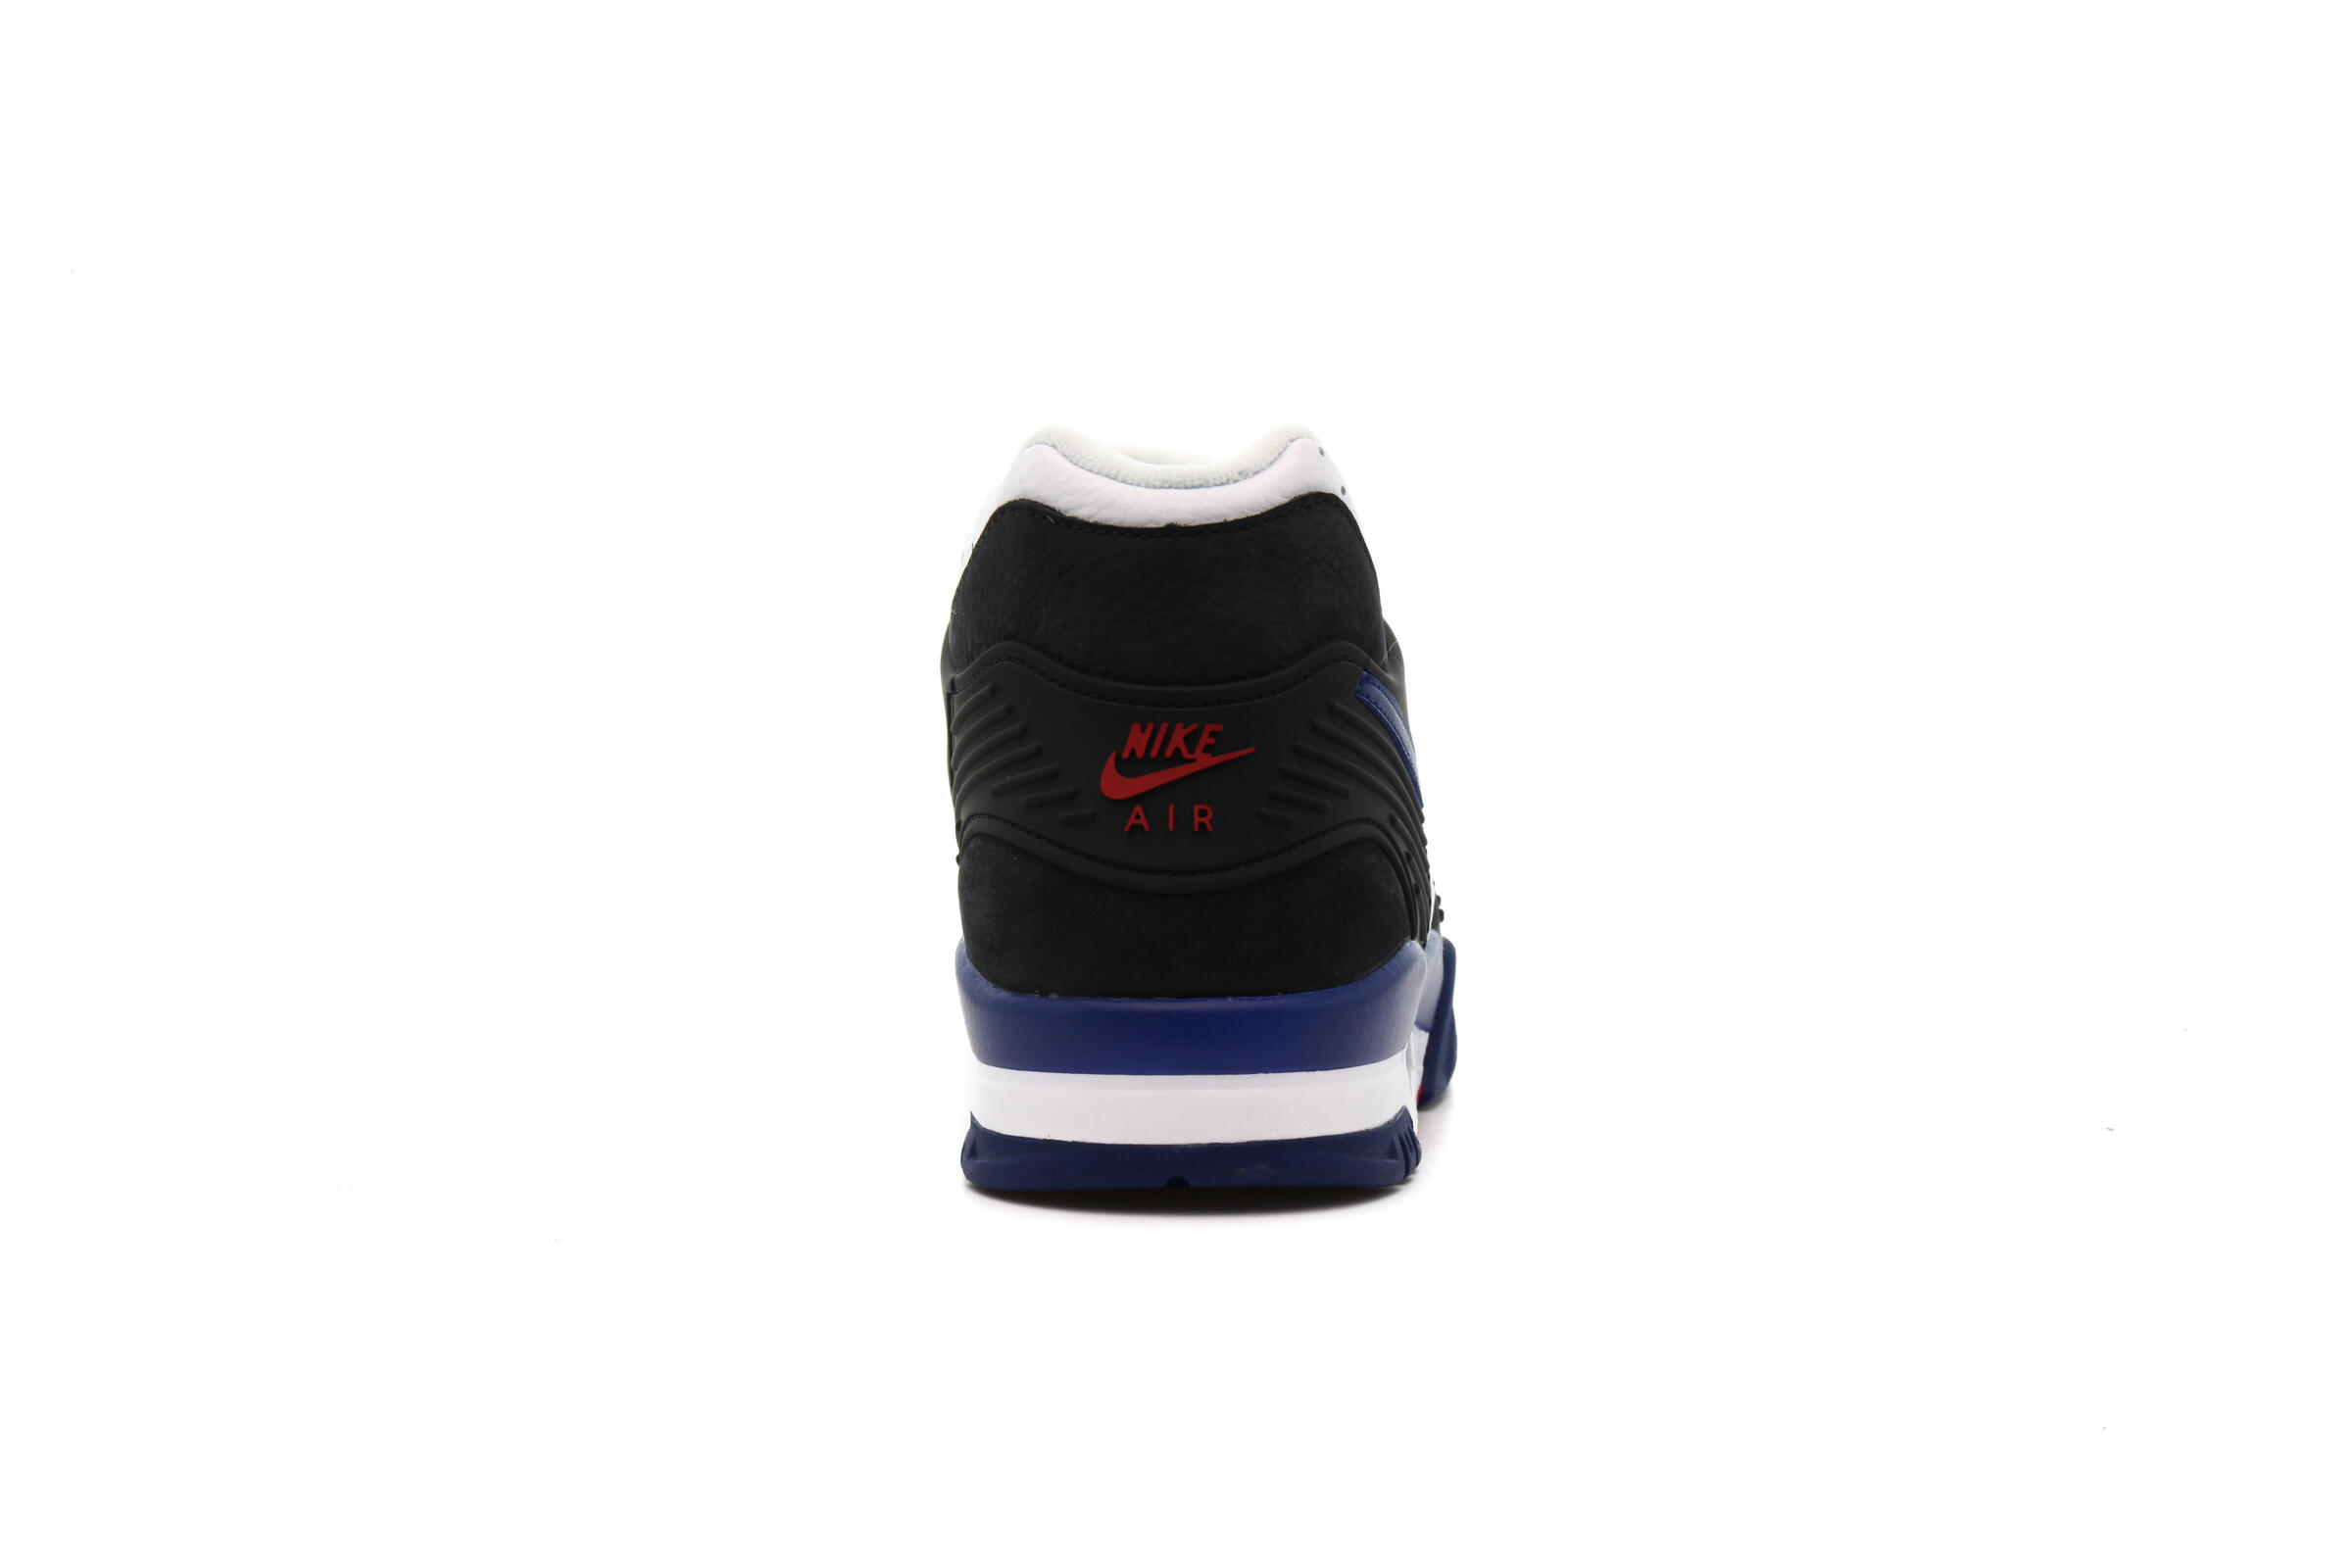 Nike AIR TRAINER 3 "BLACK"